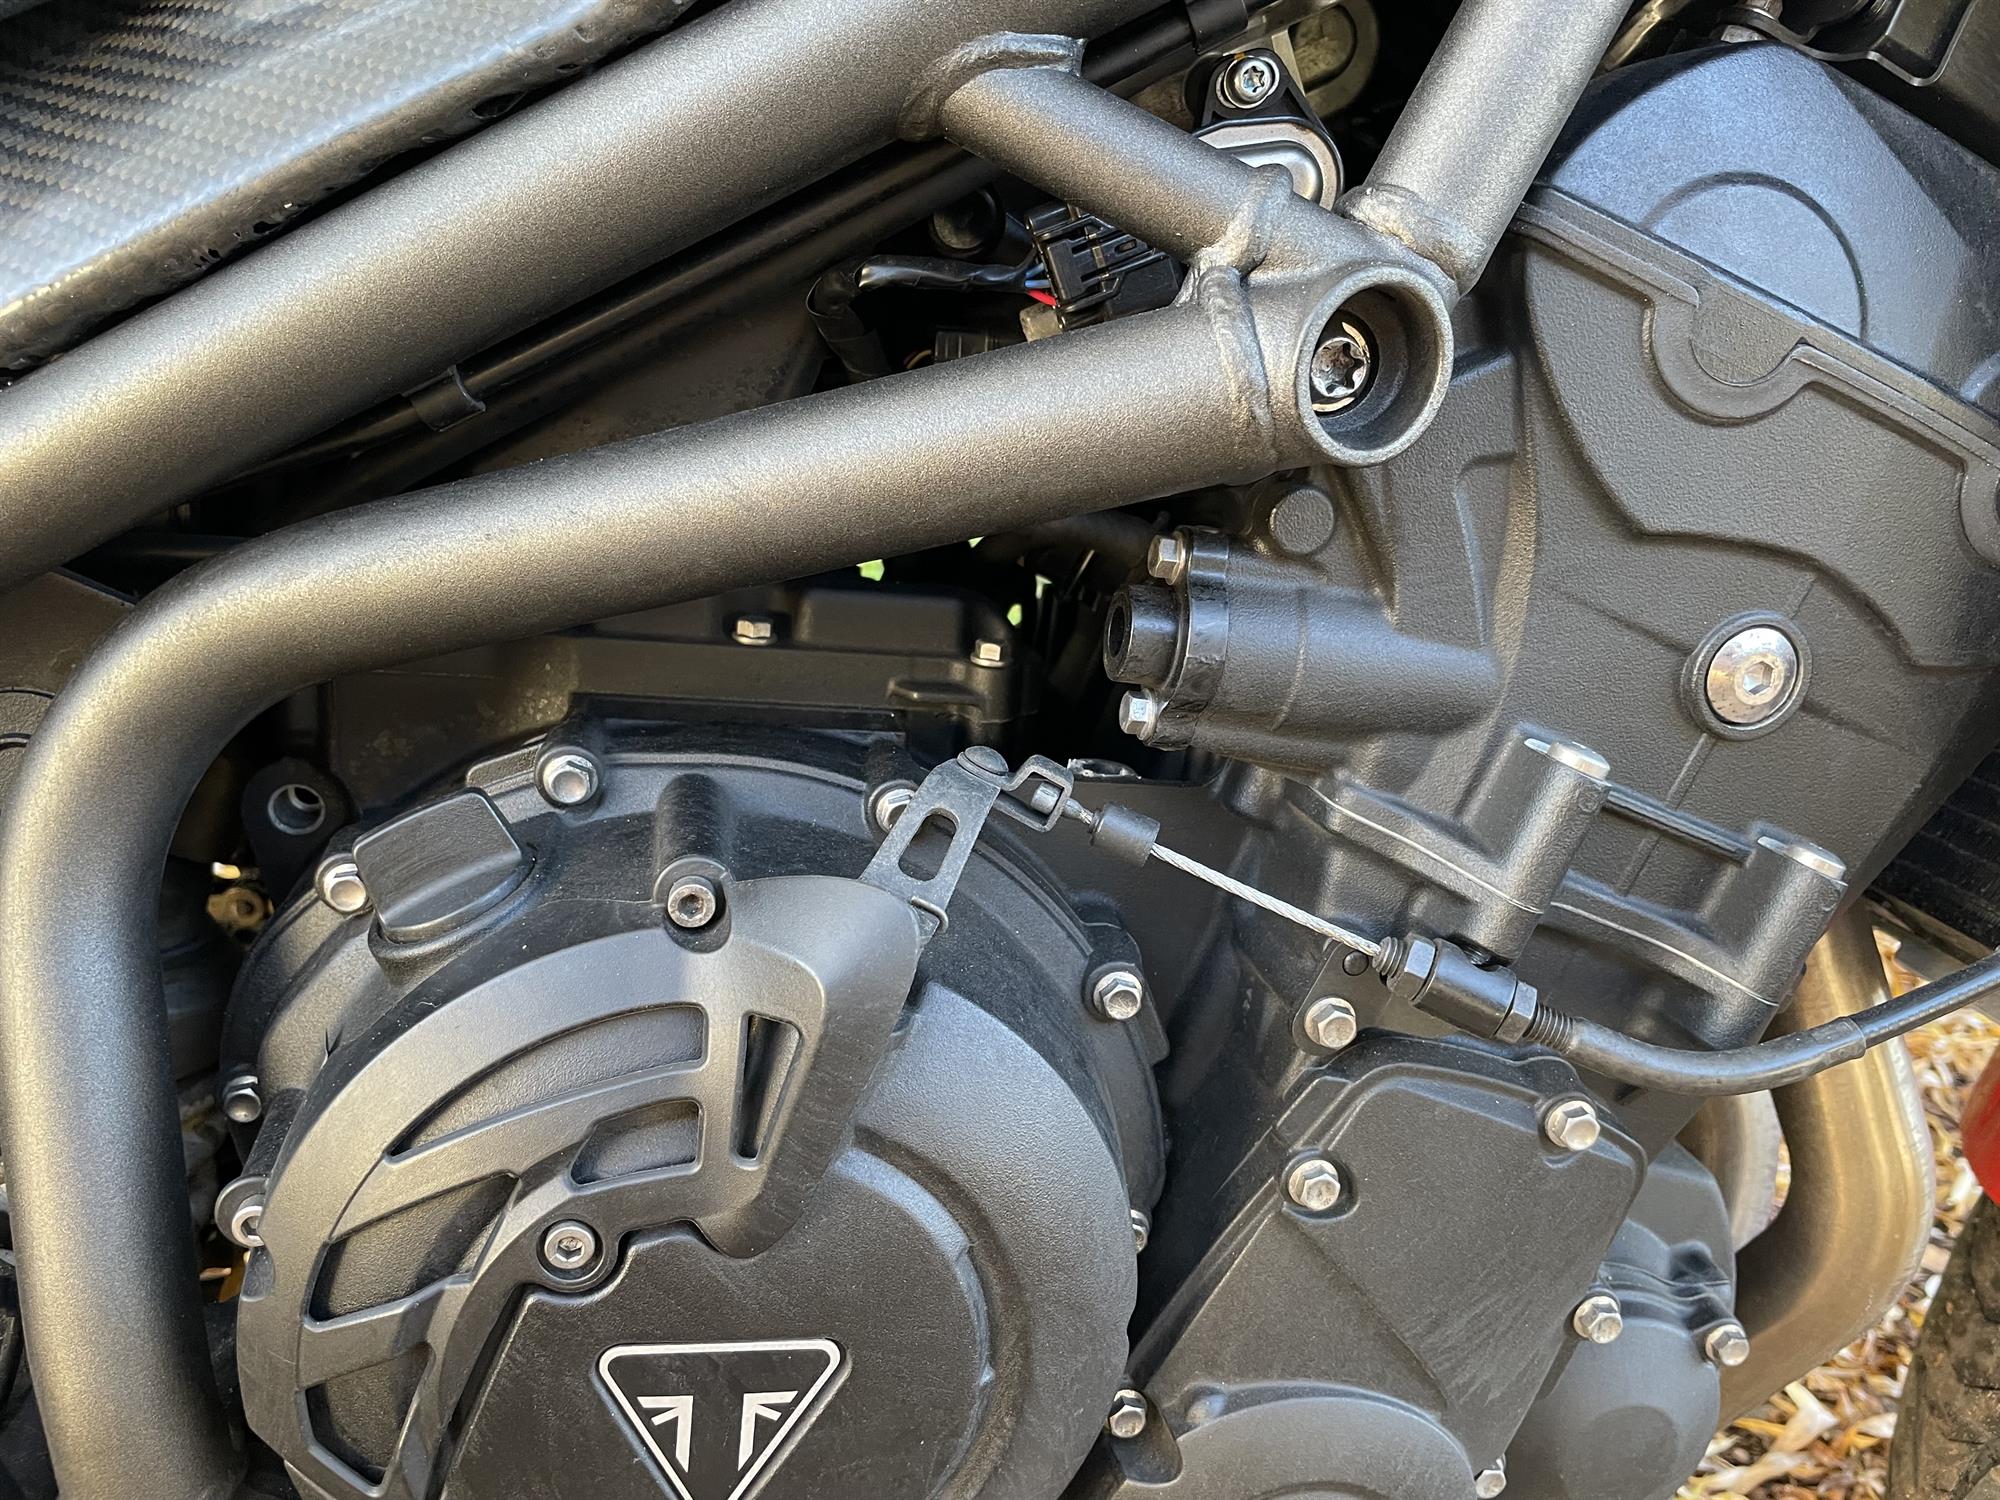 2015 Triumph Tiger 800 XRT 800cc - Image 5 of 10